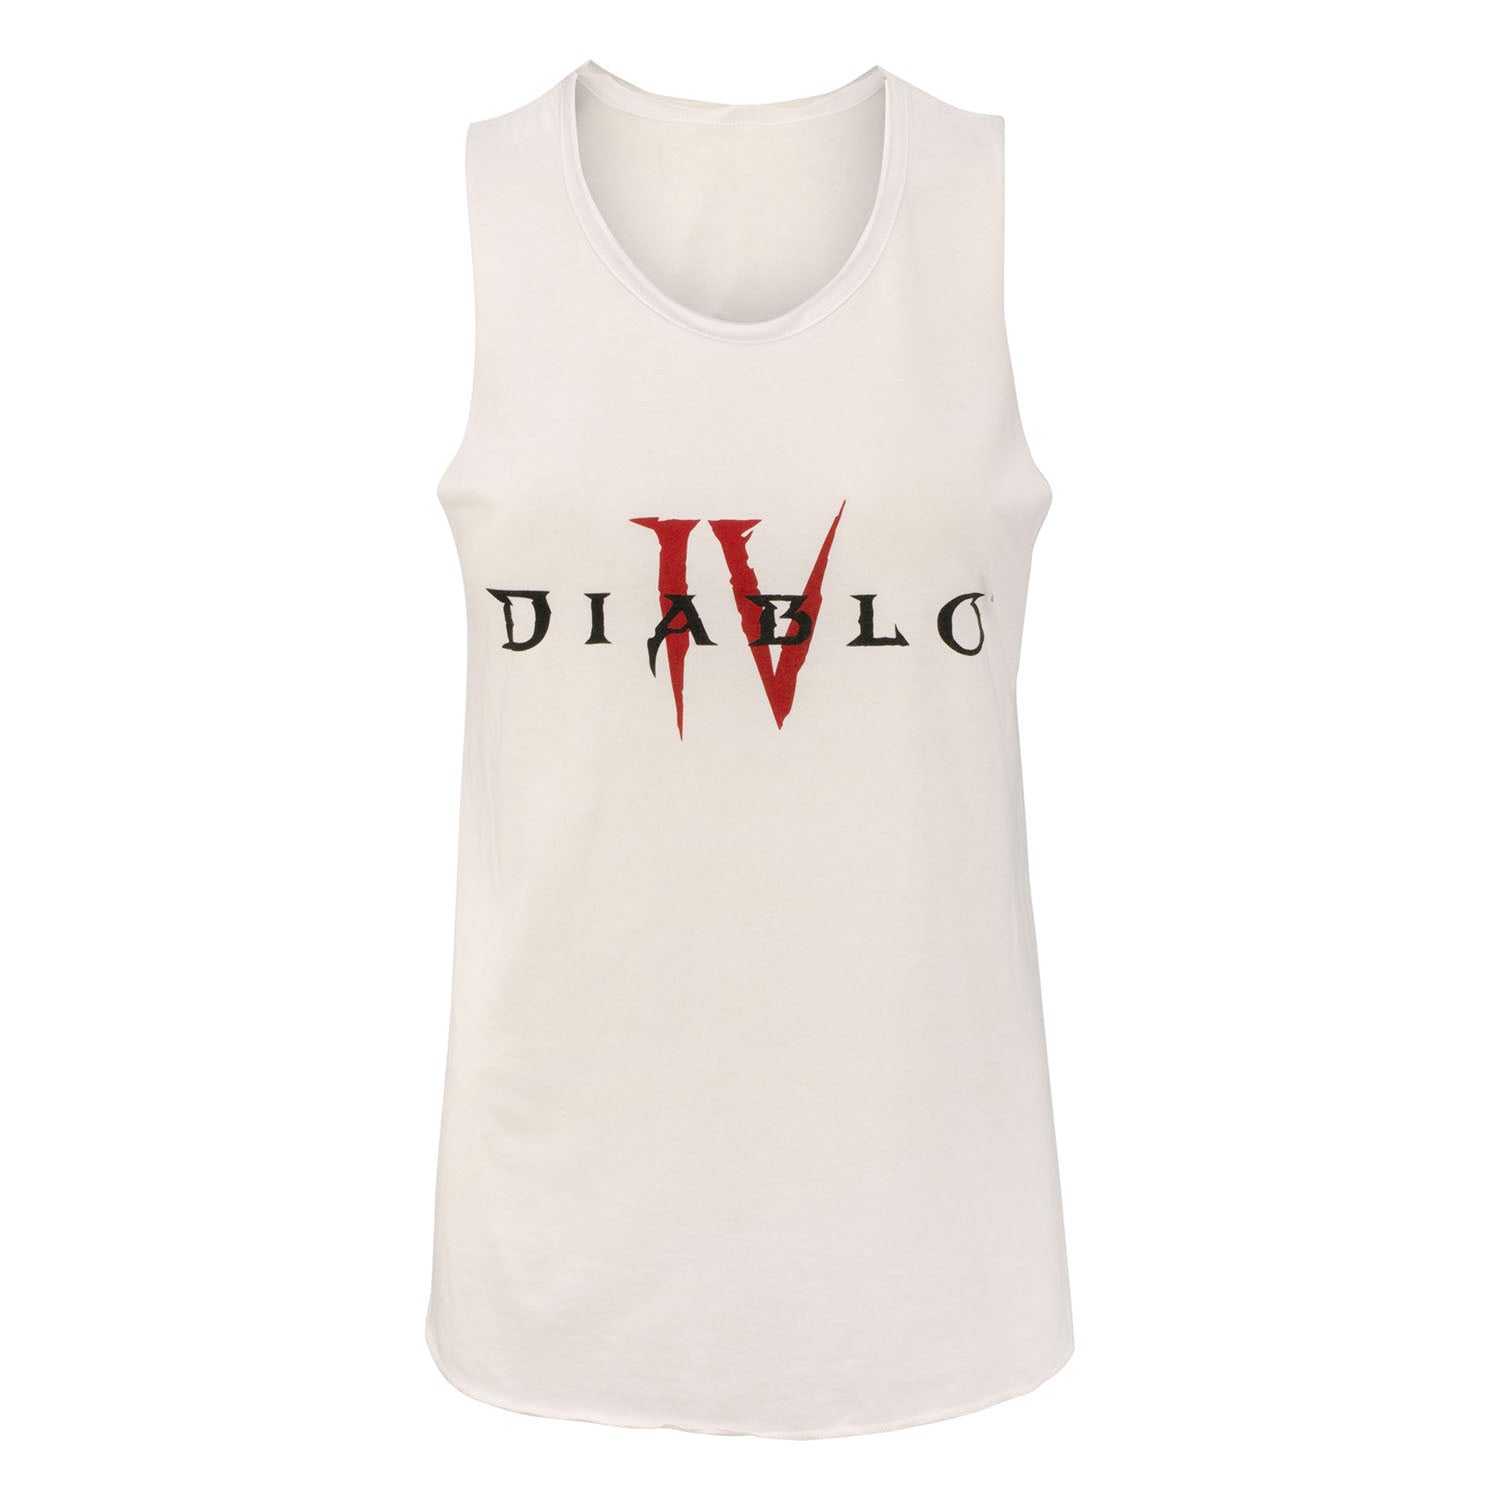 Diablo IV Women's White Tank Top - Front View with Diablo IV Logo